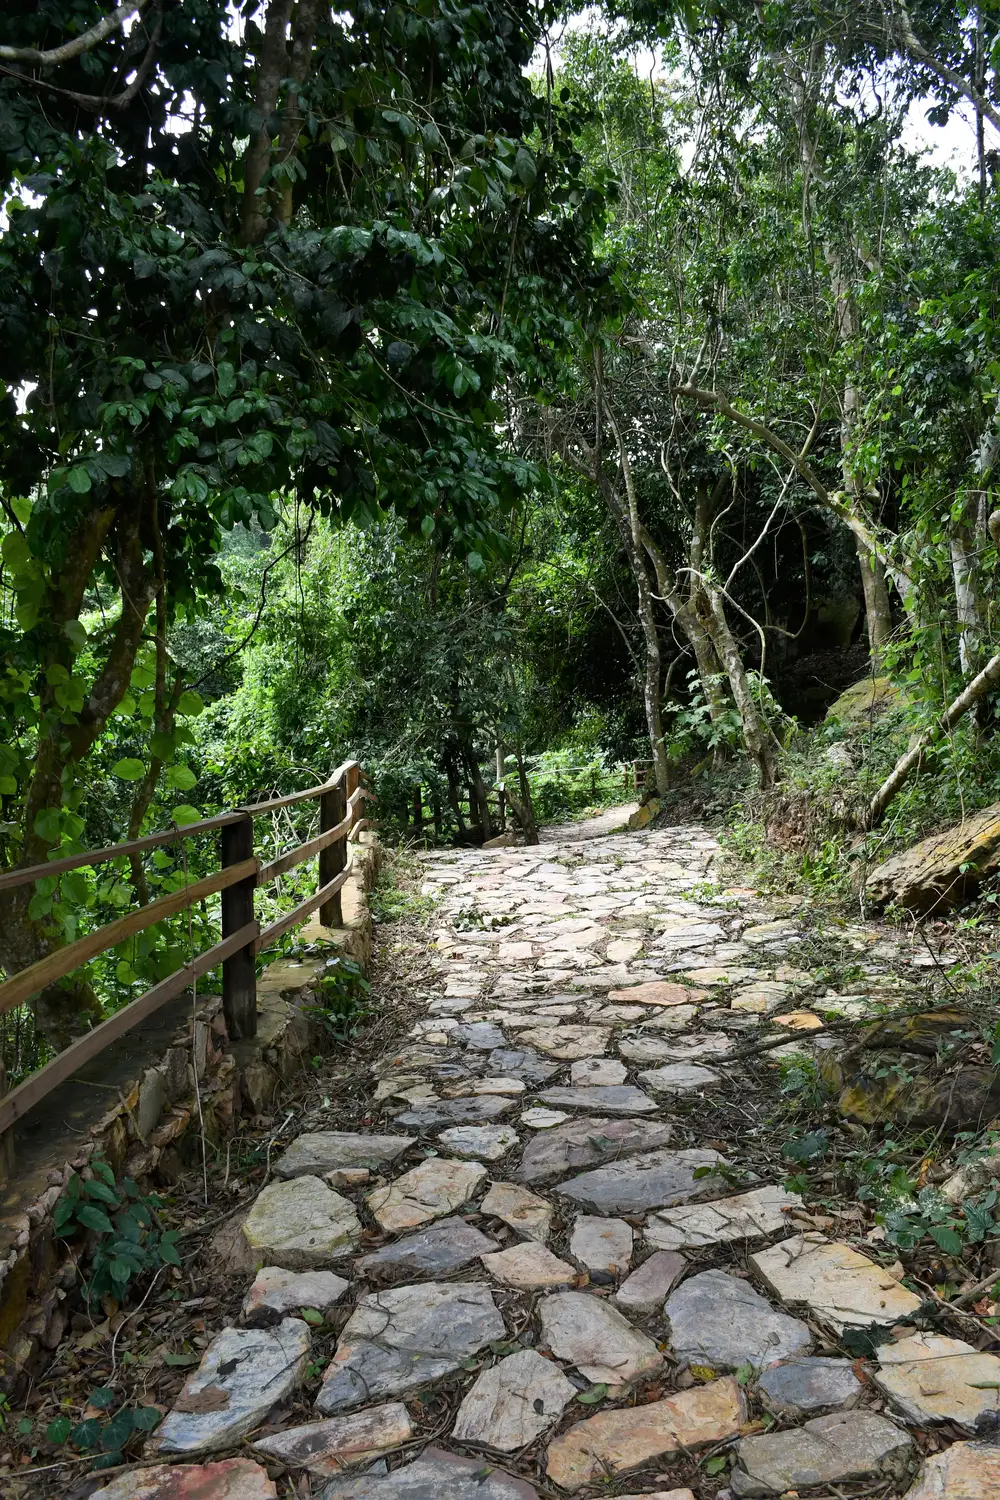 Walk path in the garden with wooden rails